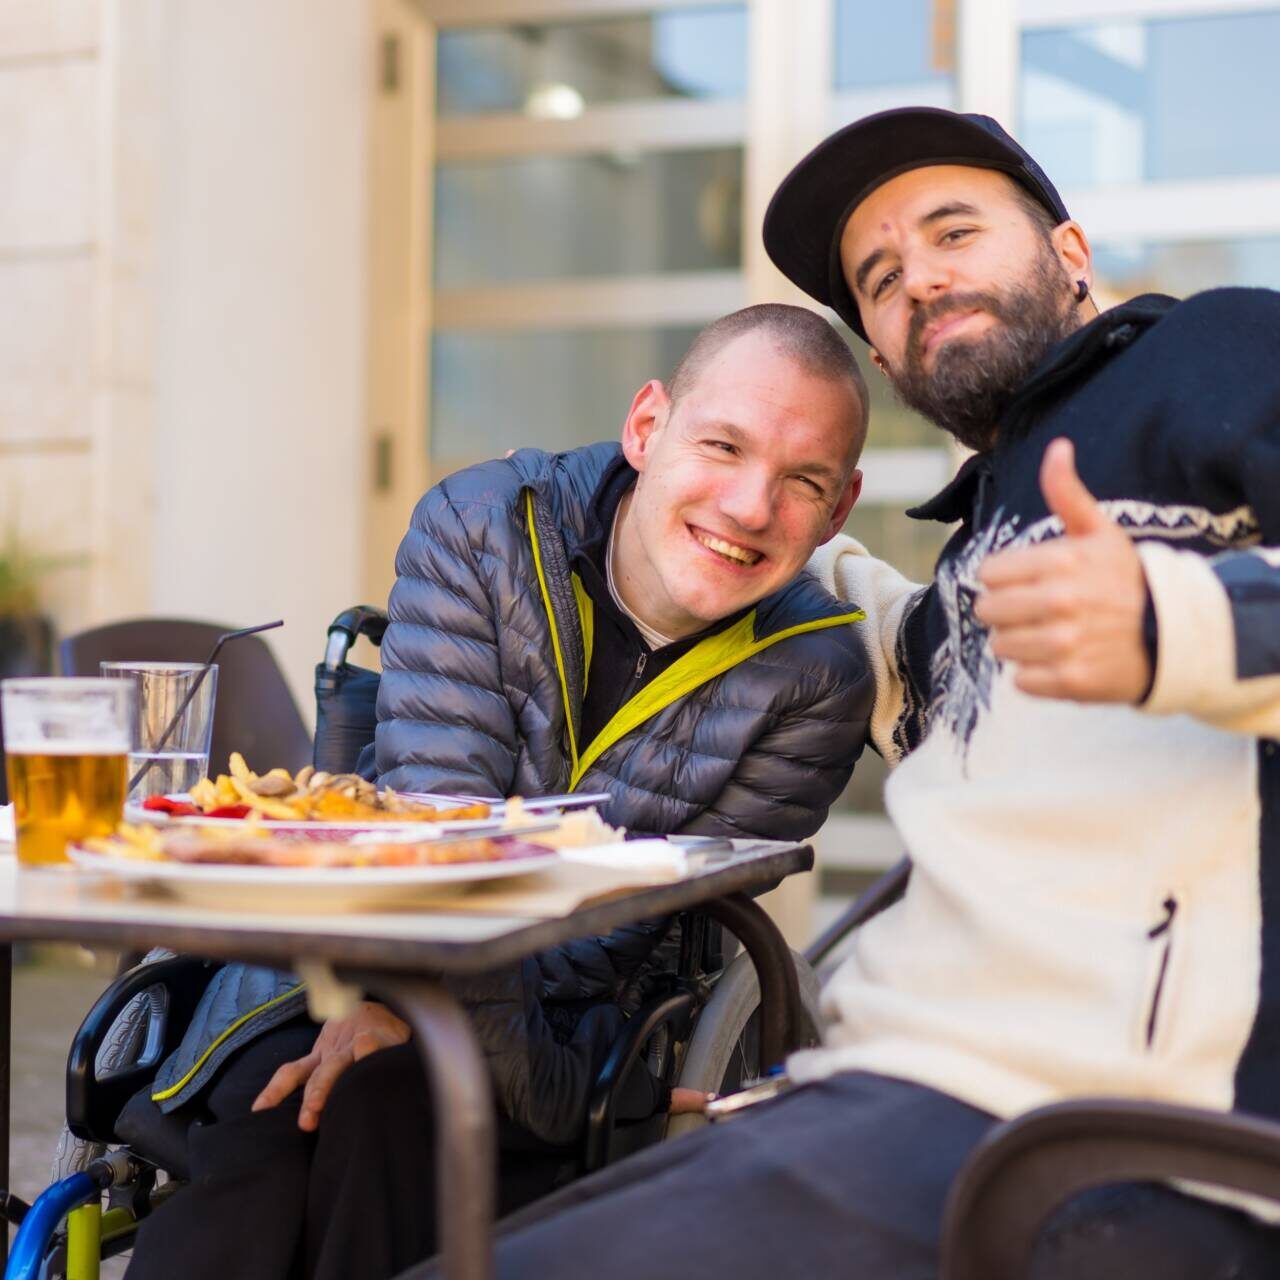 selfie-portrait-friends-eating-restaurant-terrace-disabled-person-eating